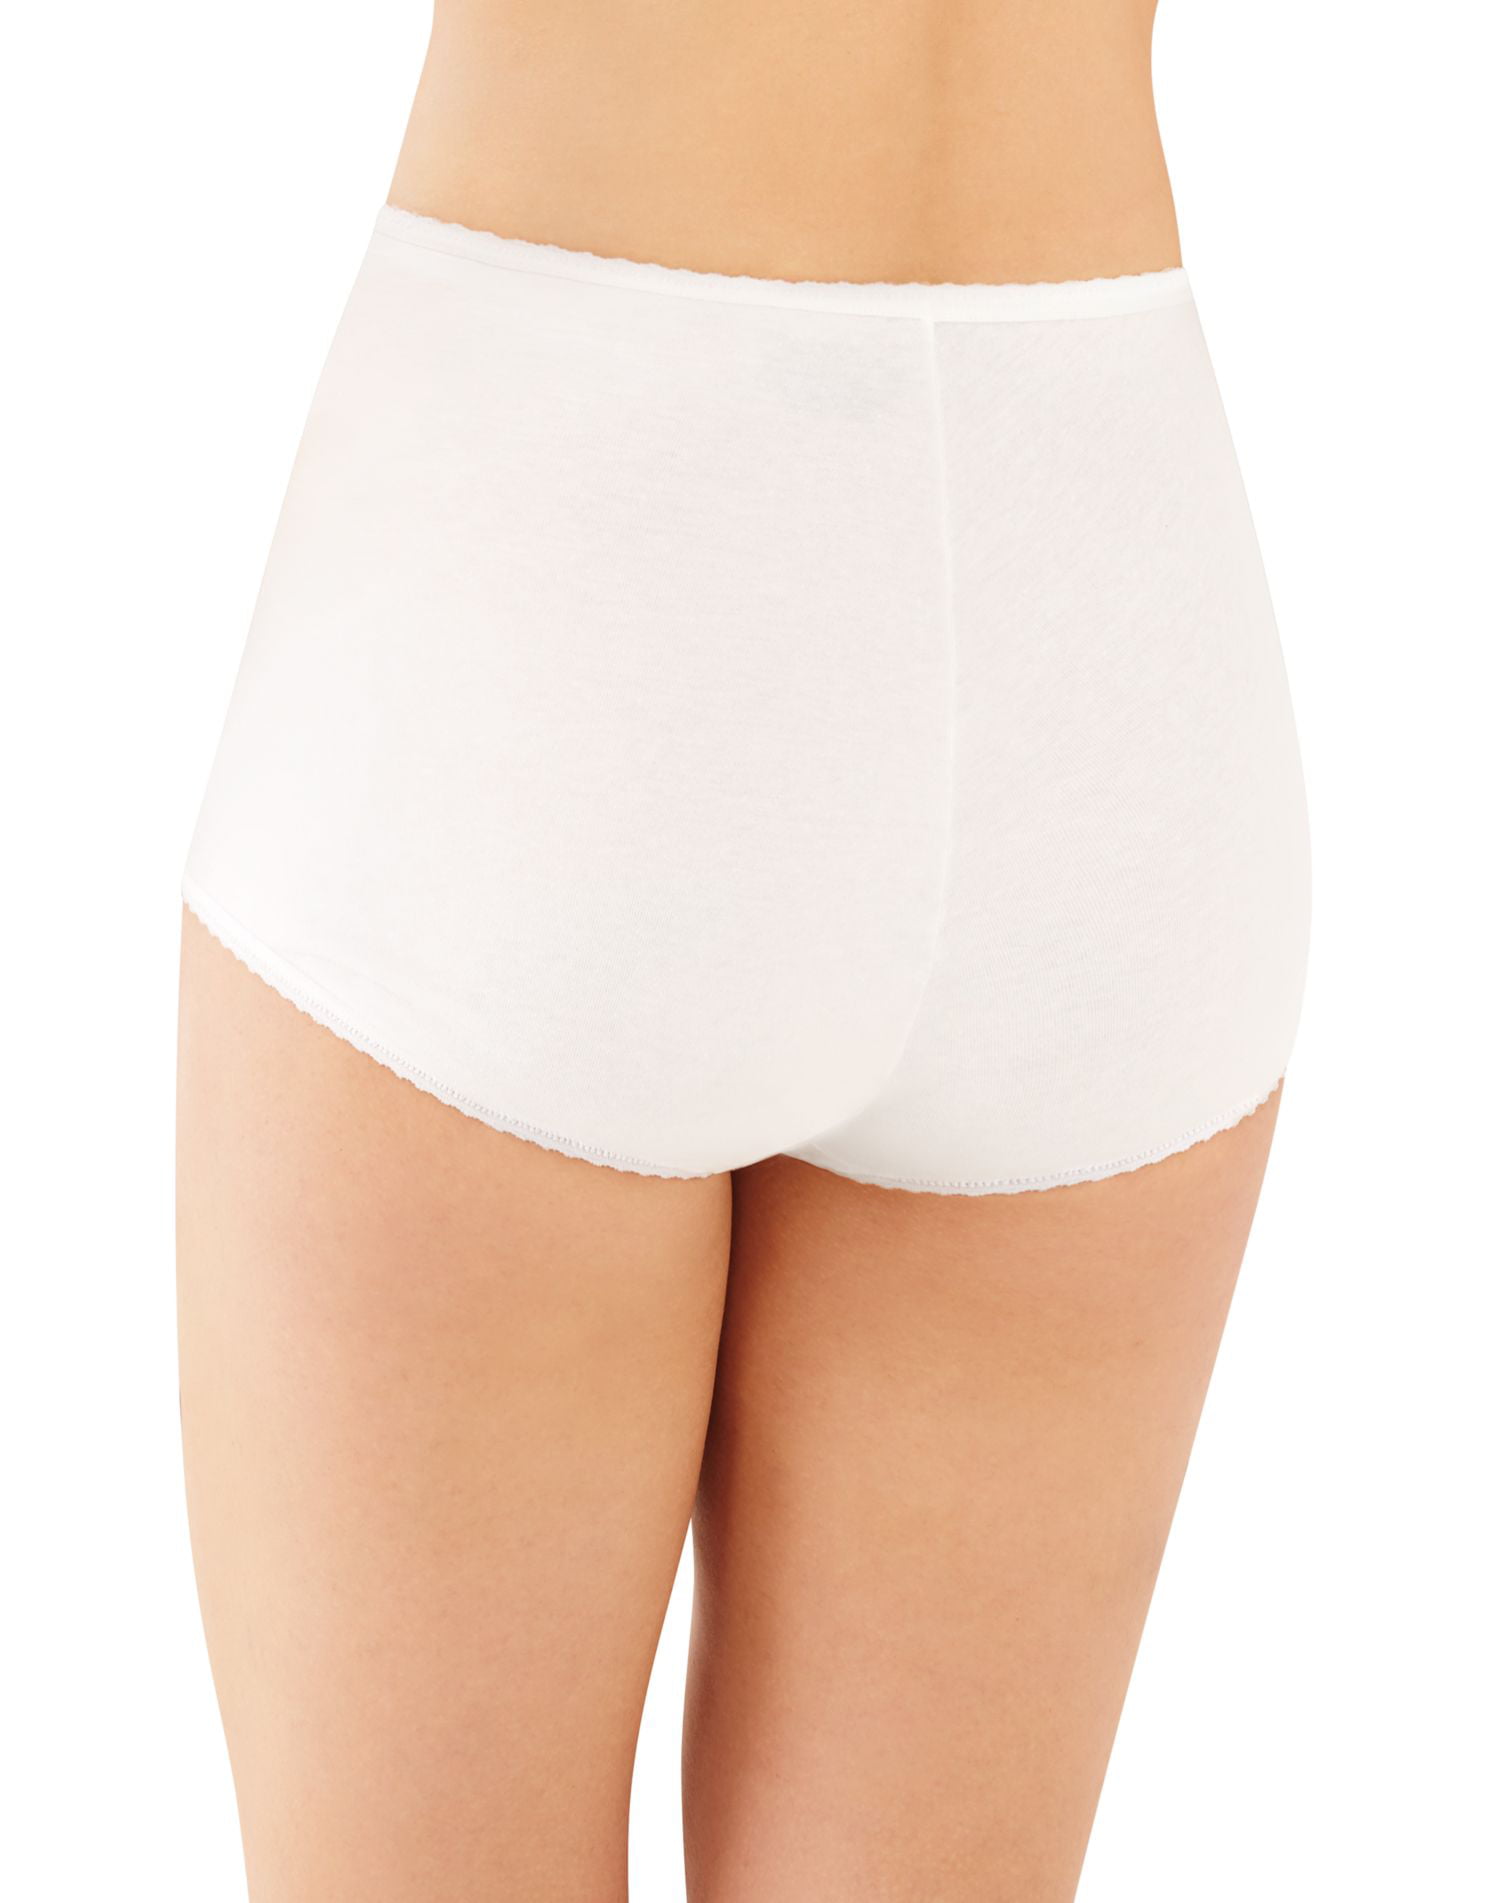 Women's Bali A332 Cool Cotton Skimp Skamp Brief Panty - 3 Pack (3 White 9)